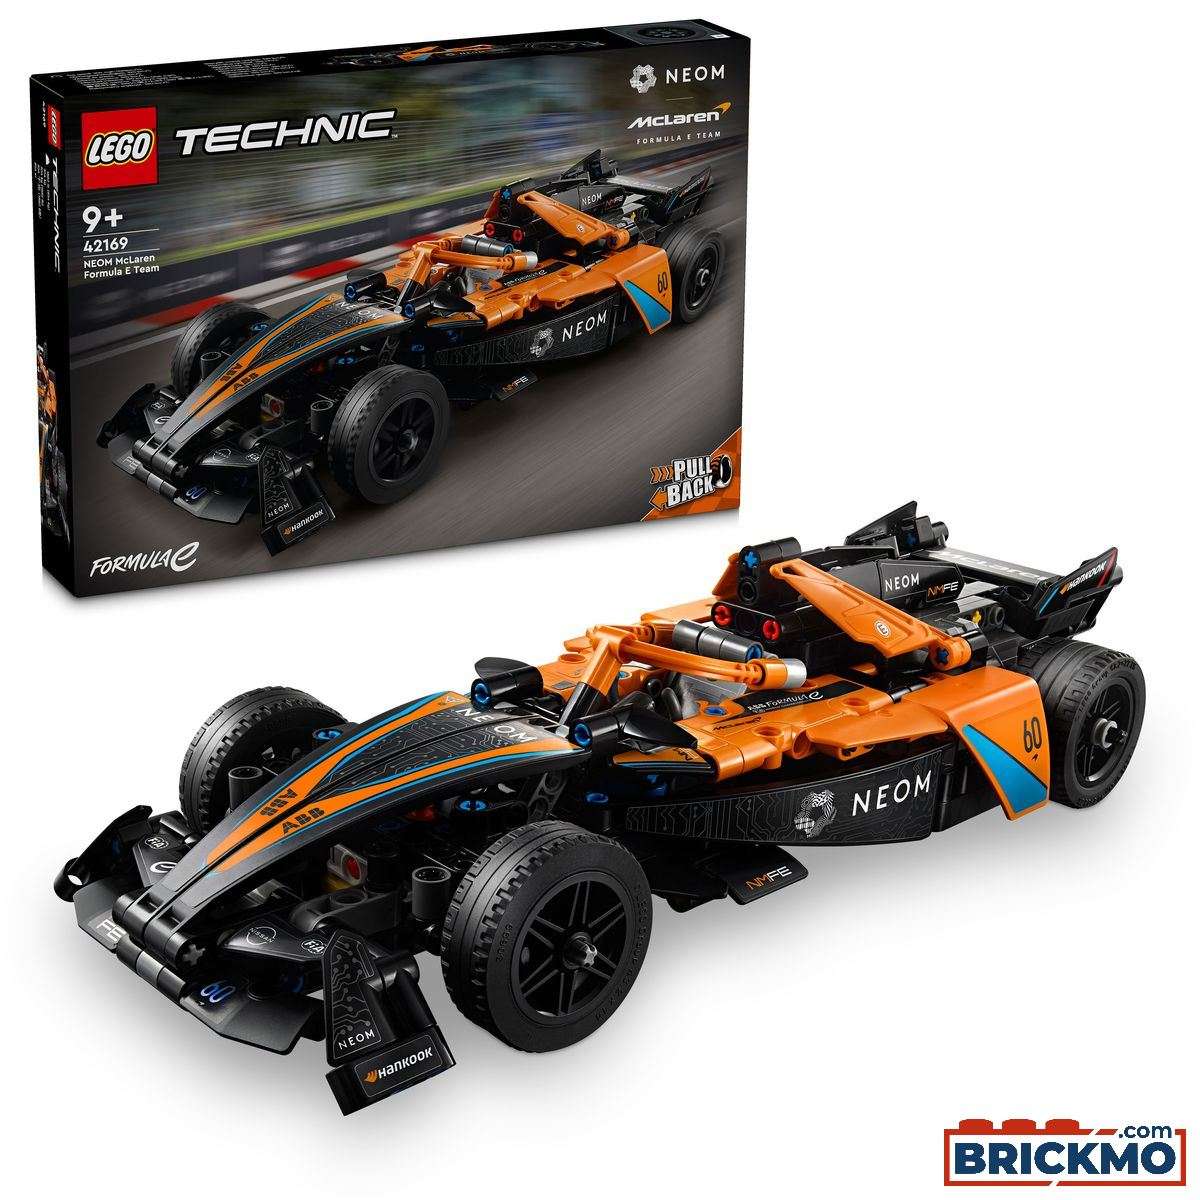 LEGO Technic 42169 NEOM McLaren Formula E Race Car 42169